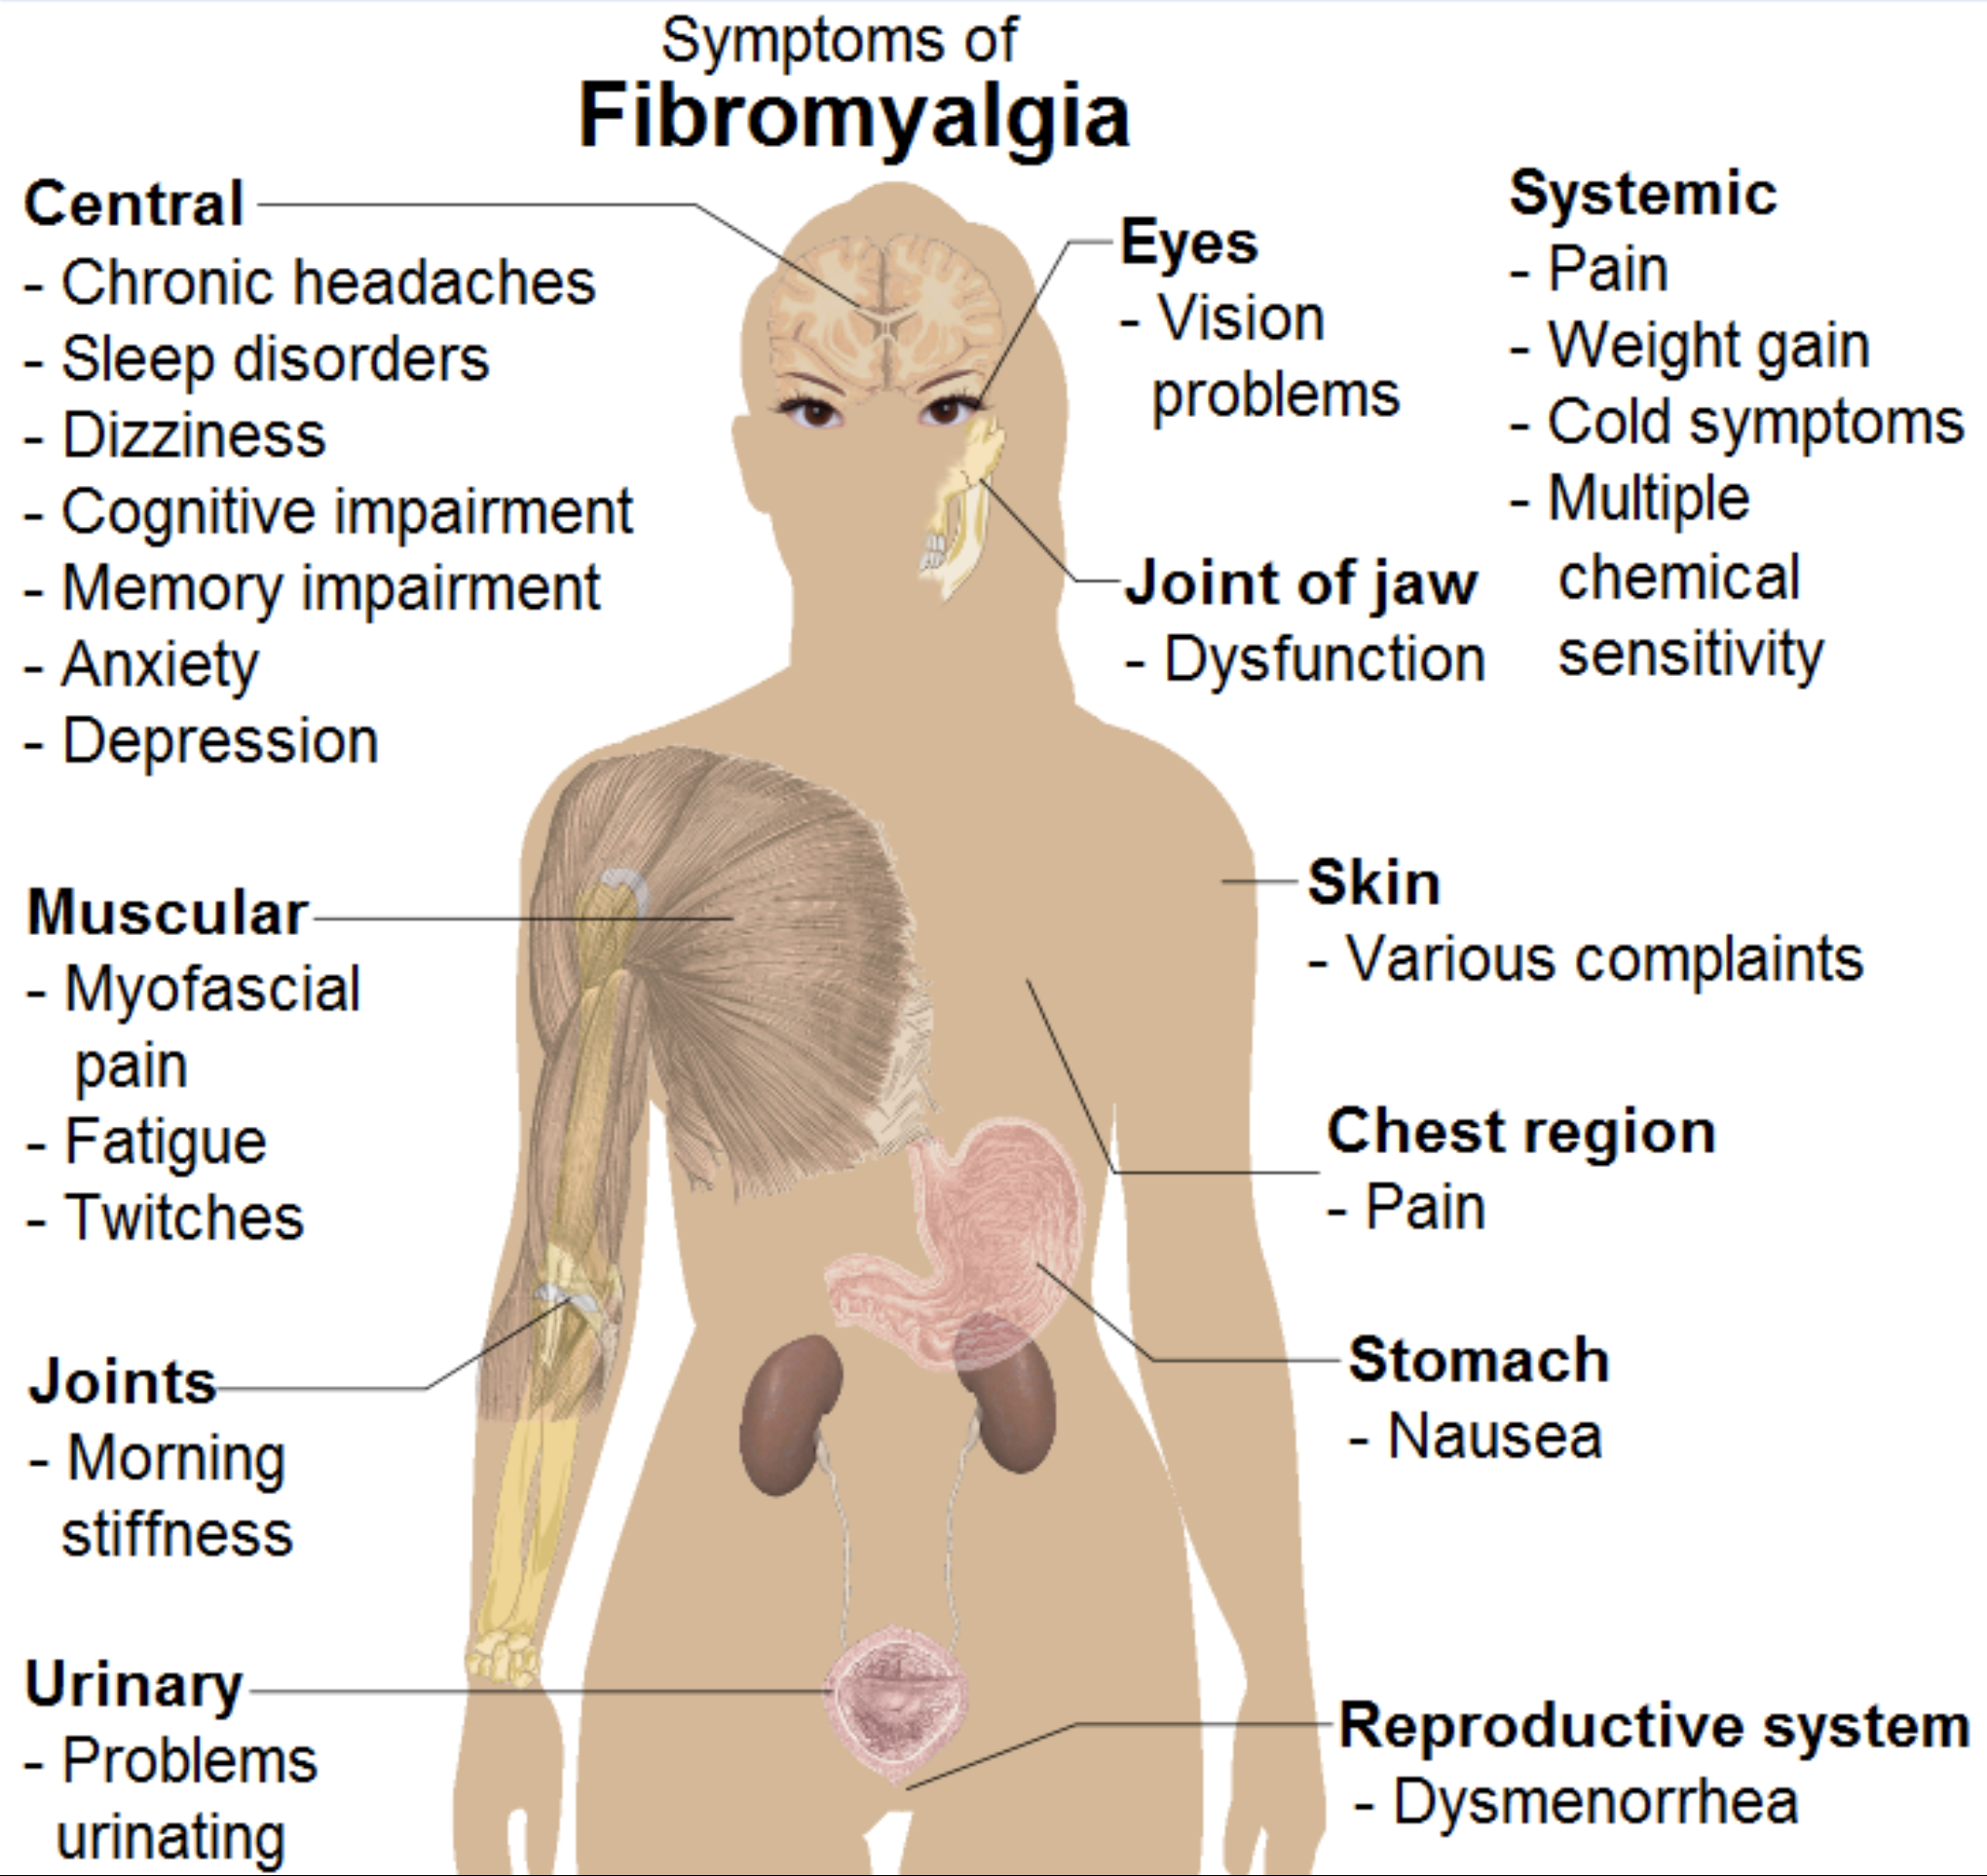 Fibromyalgia and optic neuritis likely share a pathophysiology of autoimmunity-related neuroinflammation.